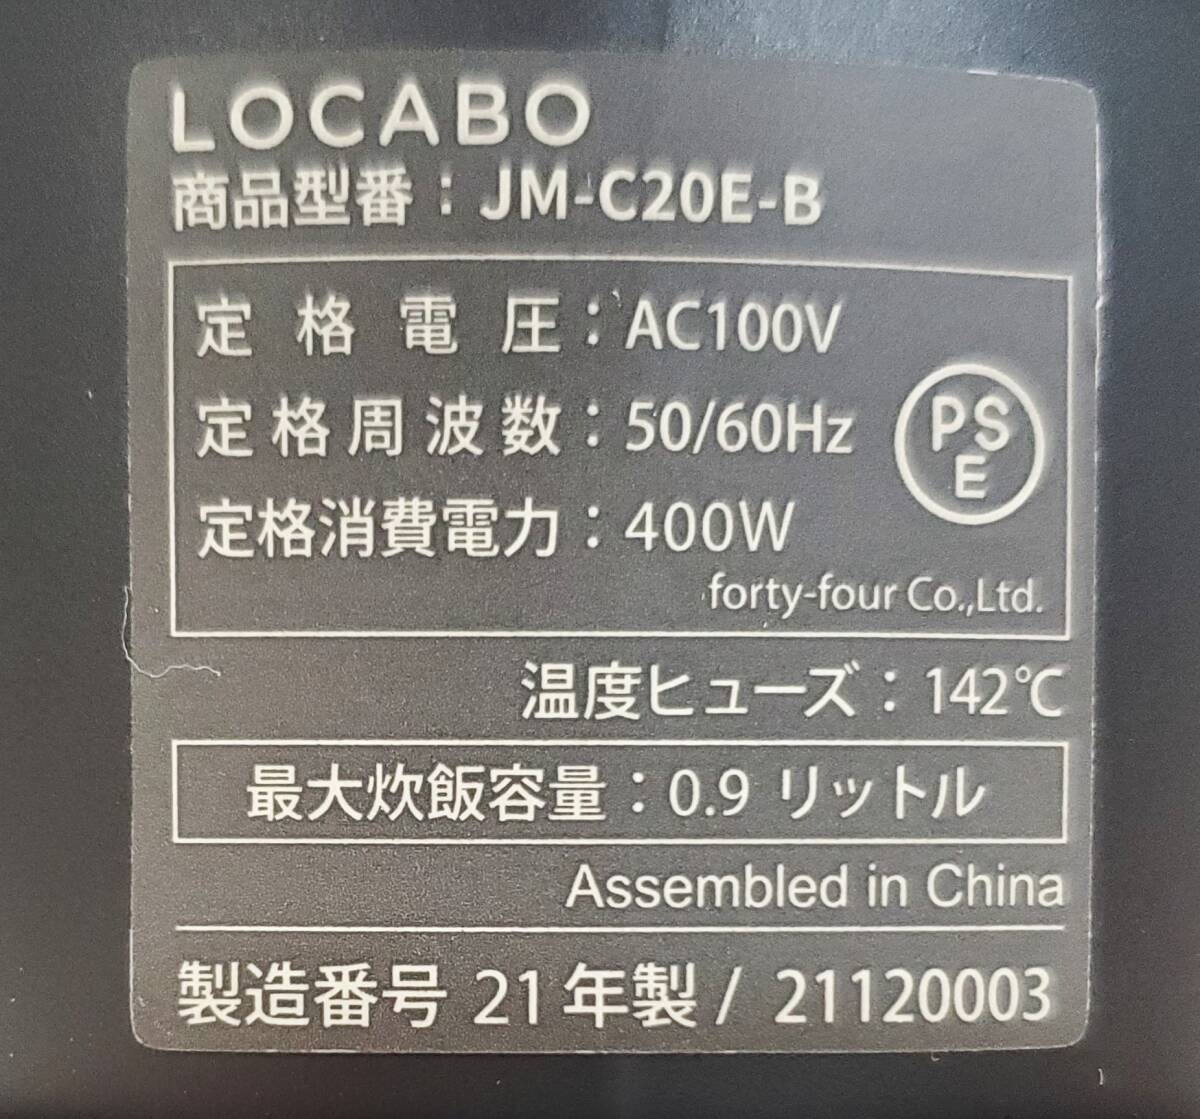 § B27994 [ не использовался товар ] LOCABO сахар качество cut рисоварка JM-C20E-B коричневый сахар качество ограничение диета rokabo принадлежности есть 